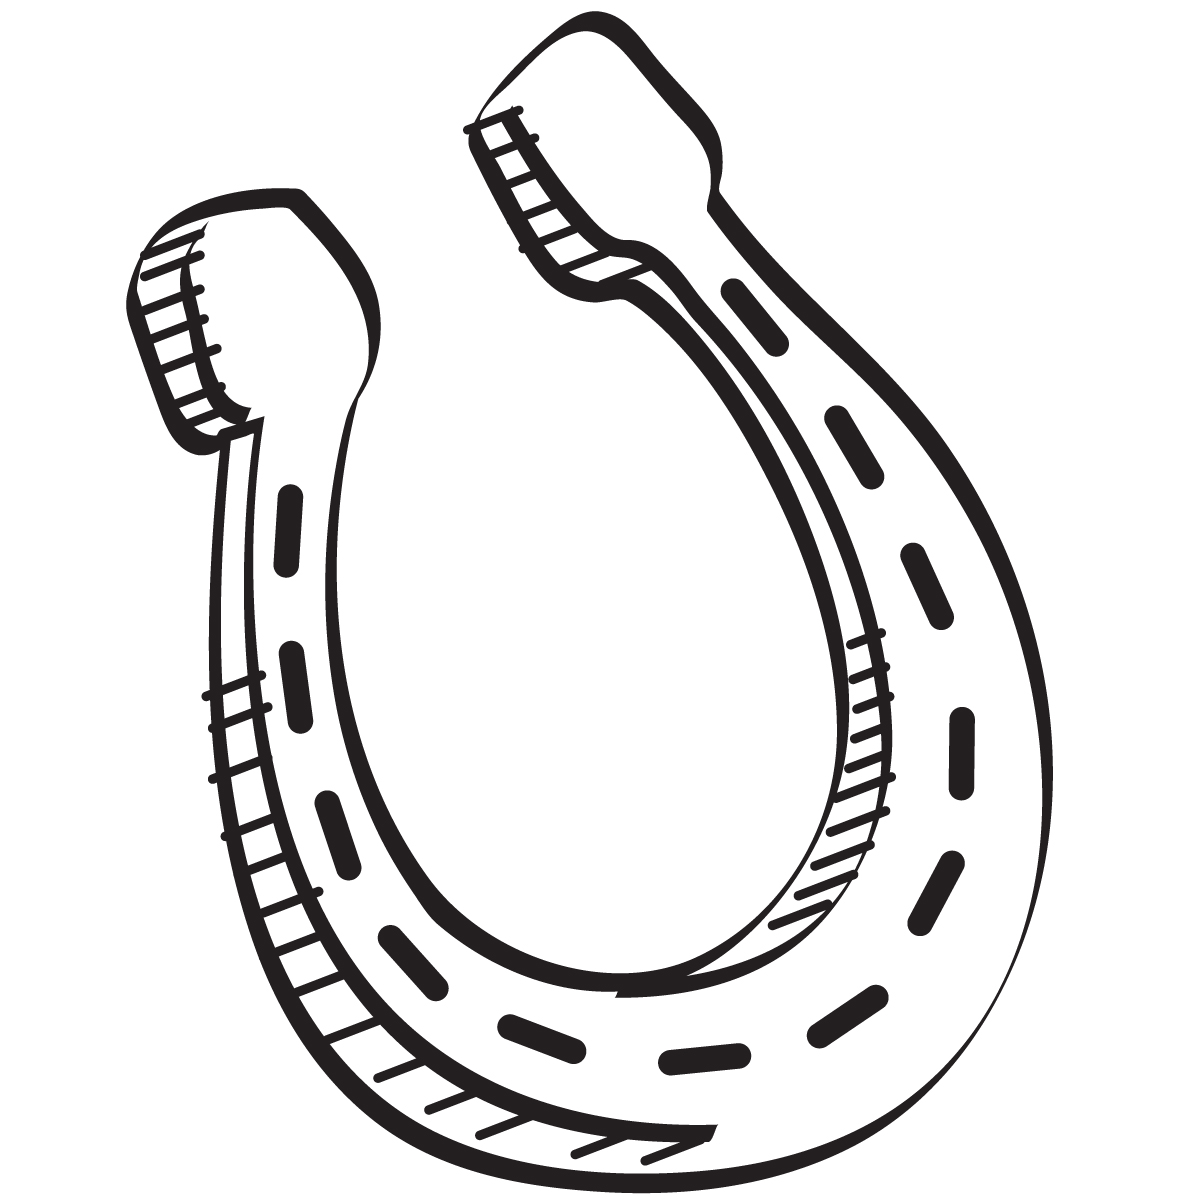 Horseshoe clip art vector free clipart images 8 clipartix